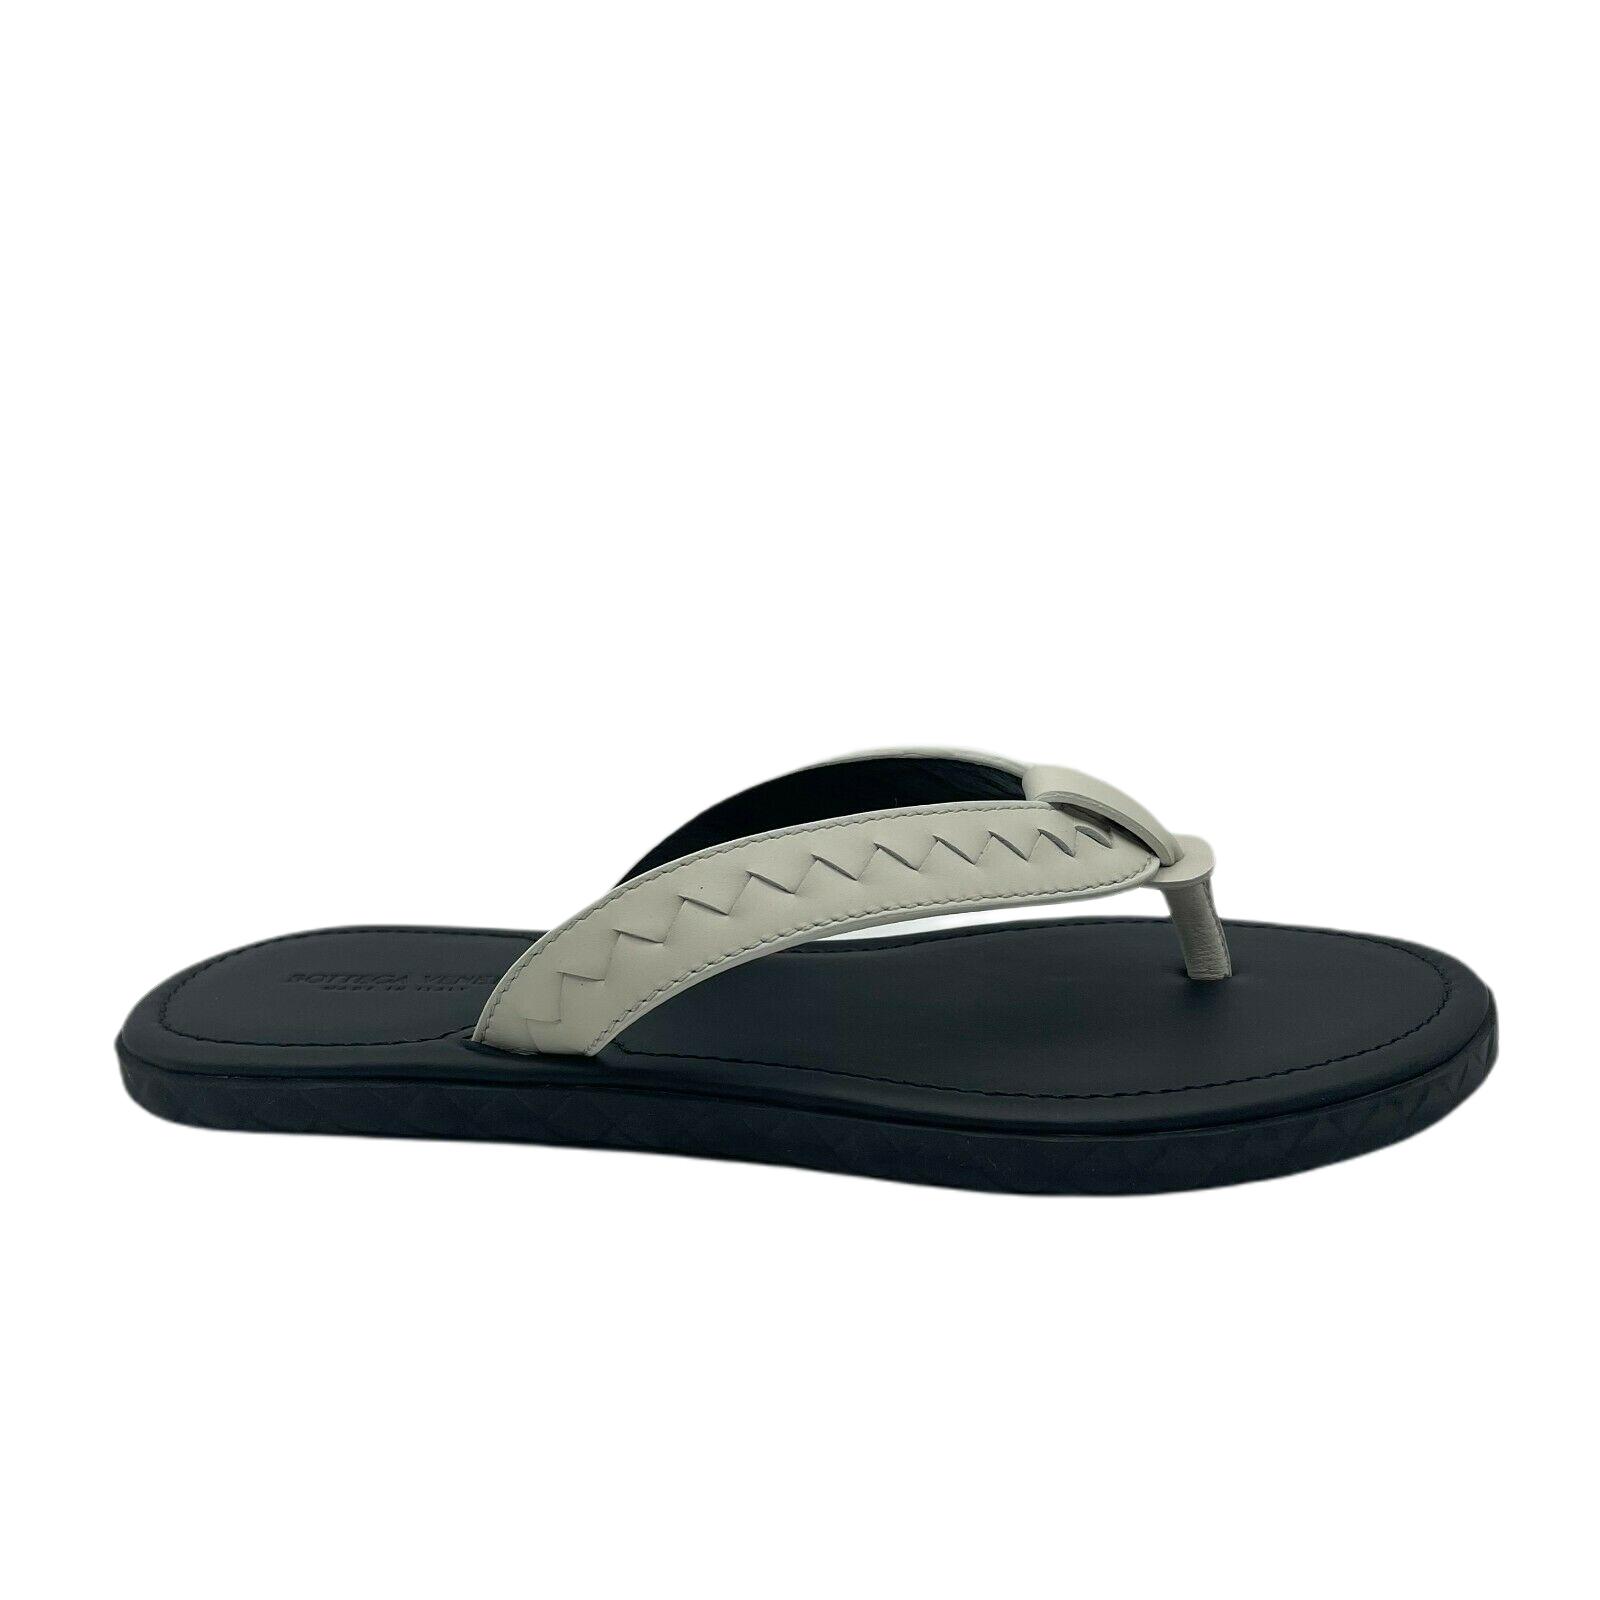 Bottega Veneta White/black Leather Thong Sandal 40/us 7 629252 